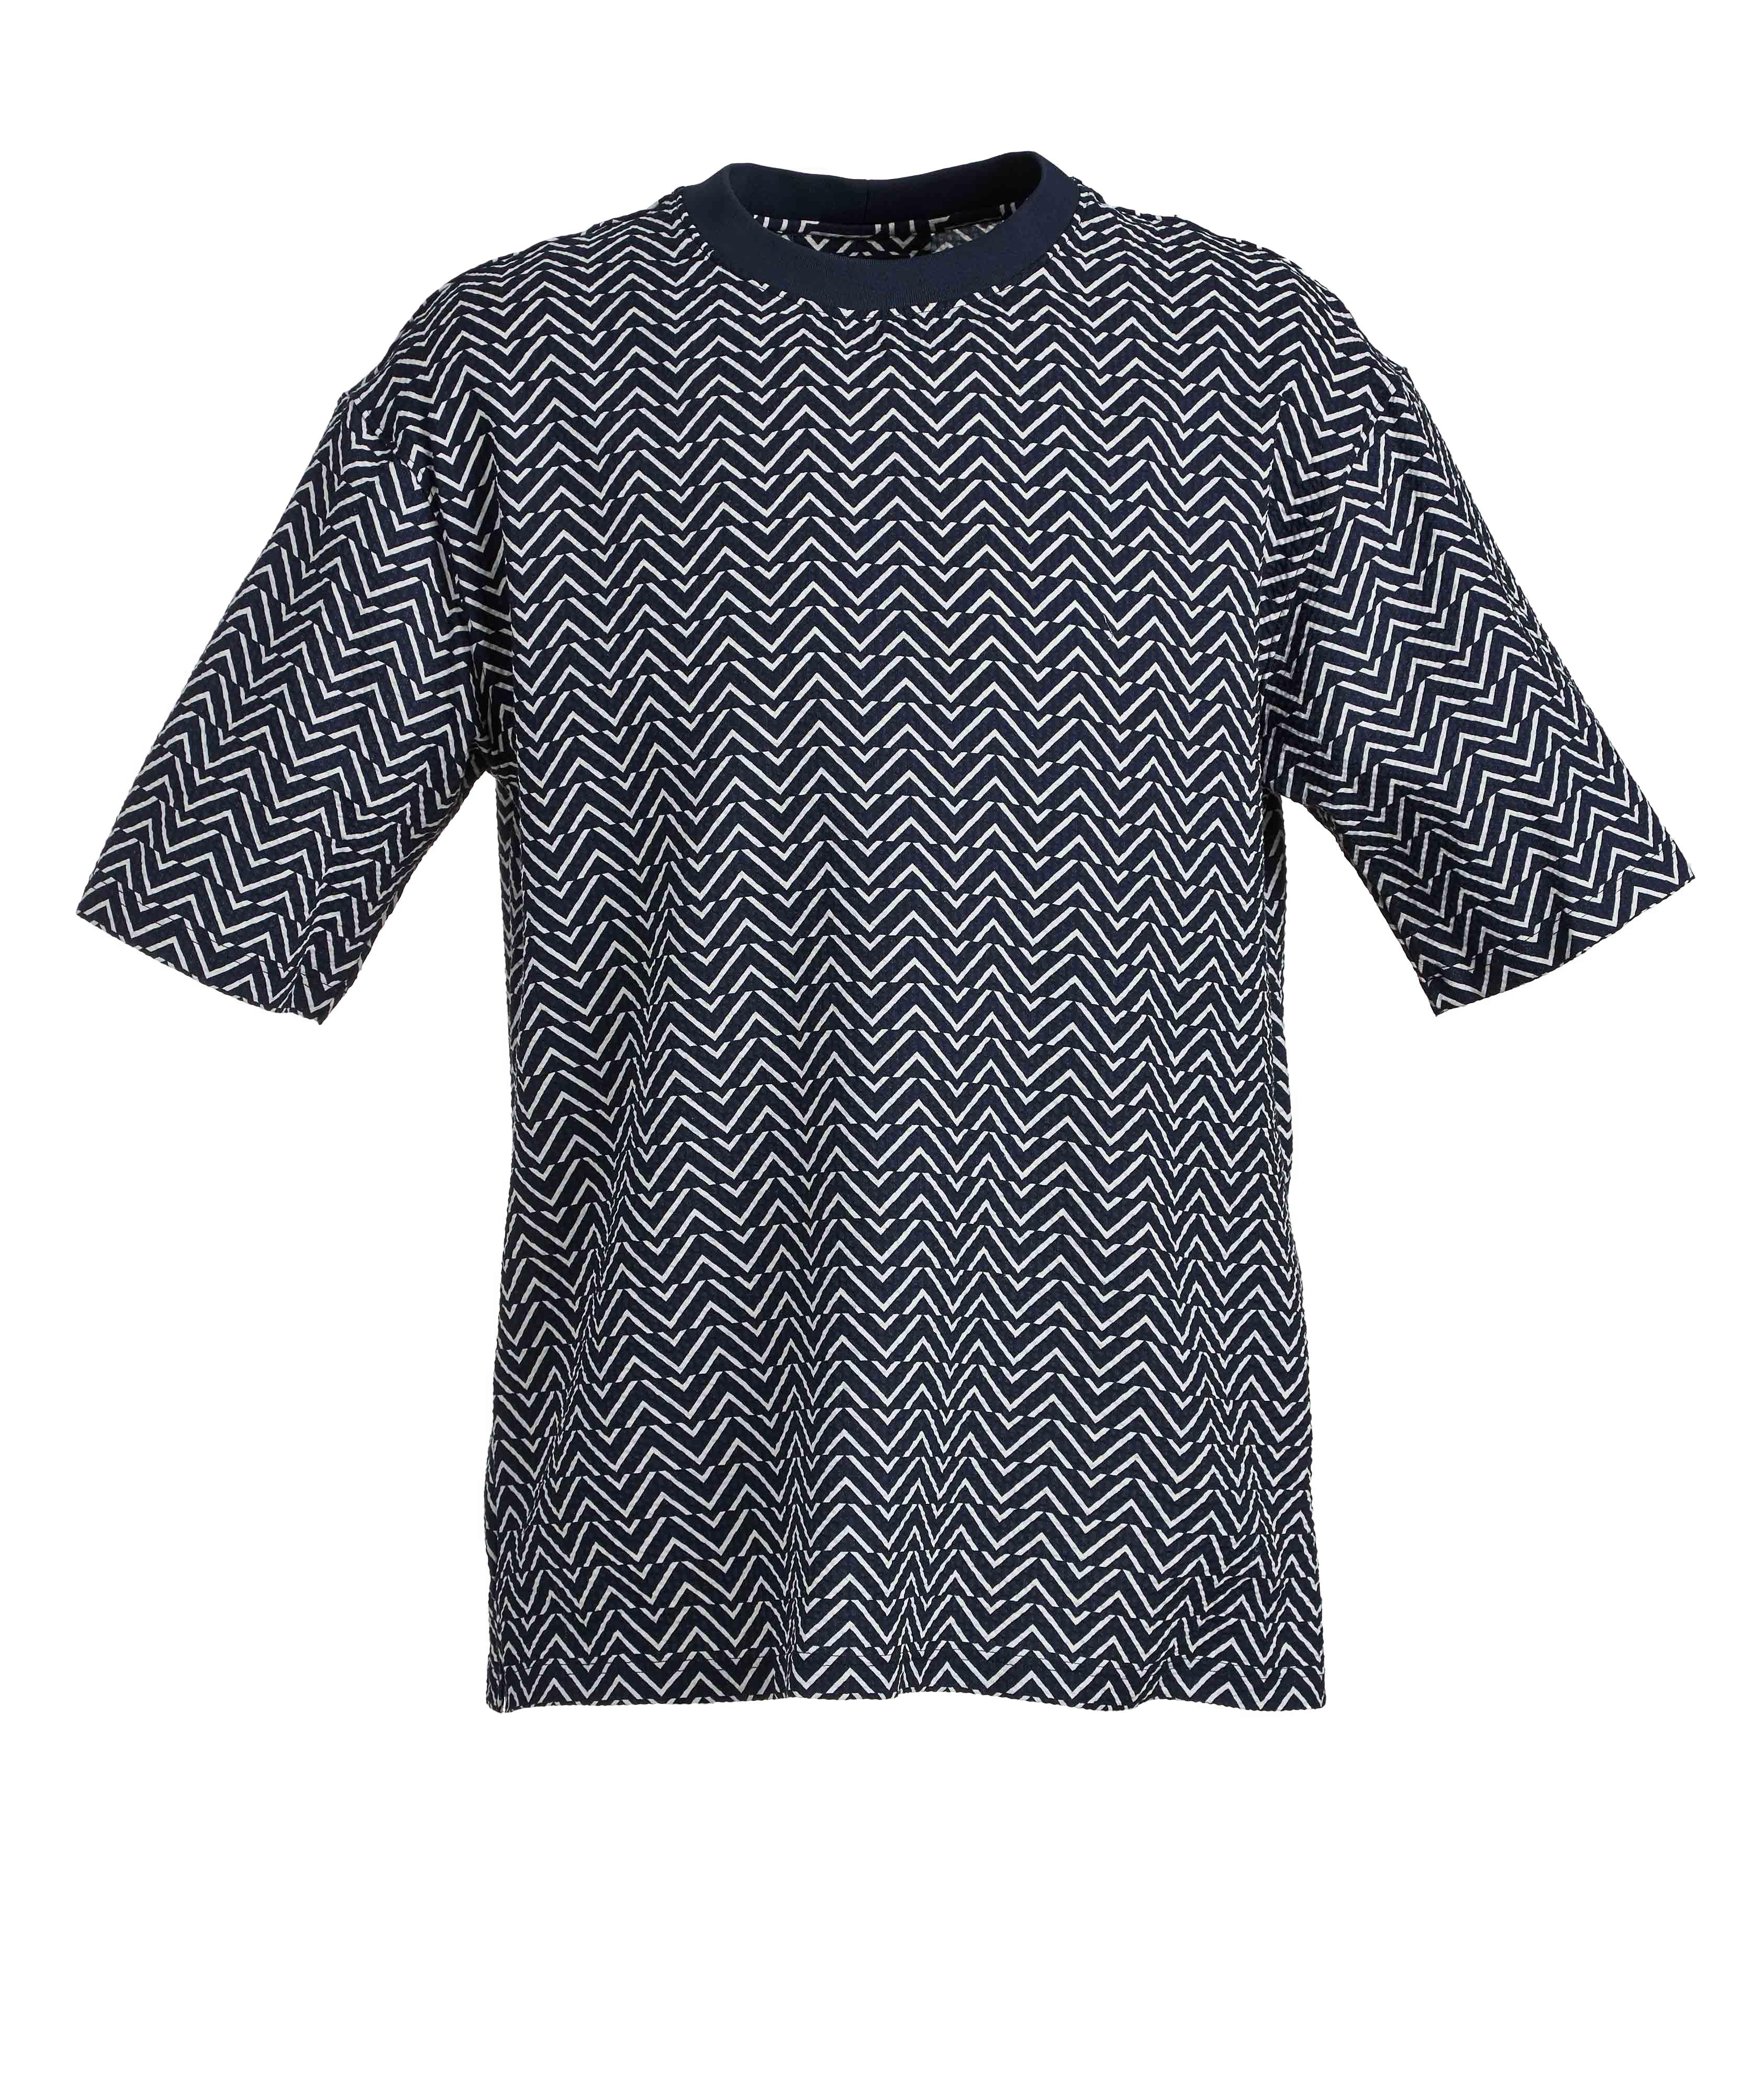 Geometric Cotton-Blend T-Shirt image 0